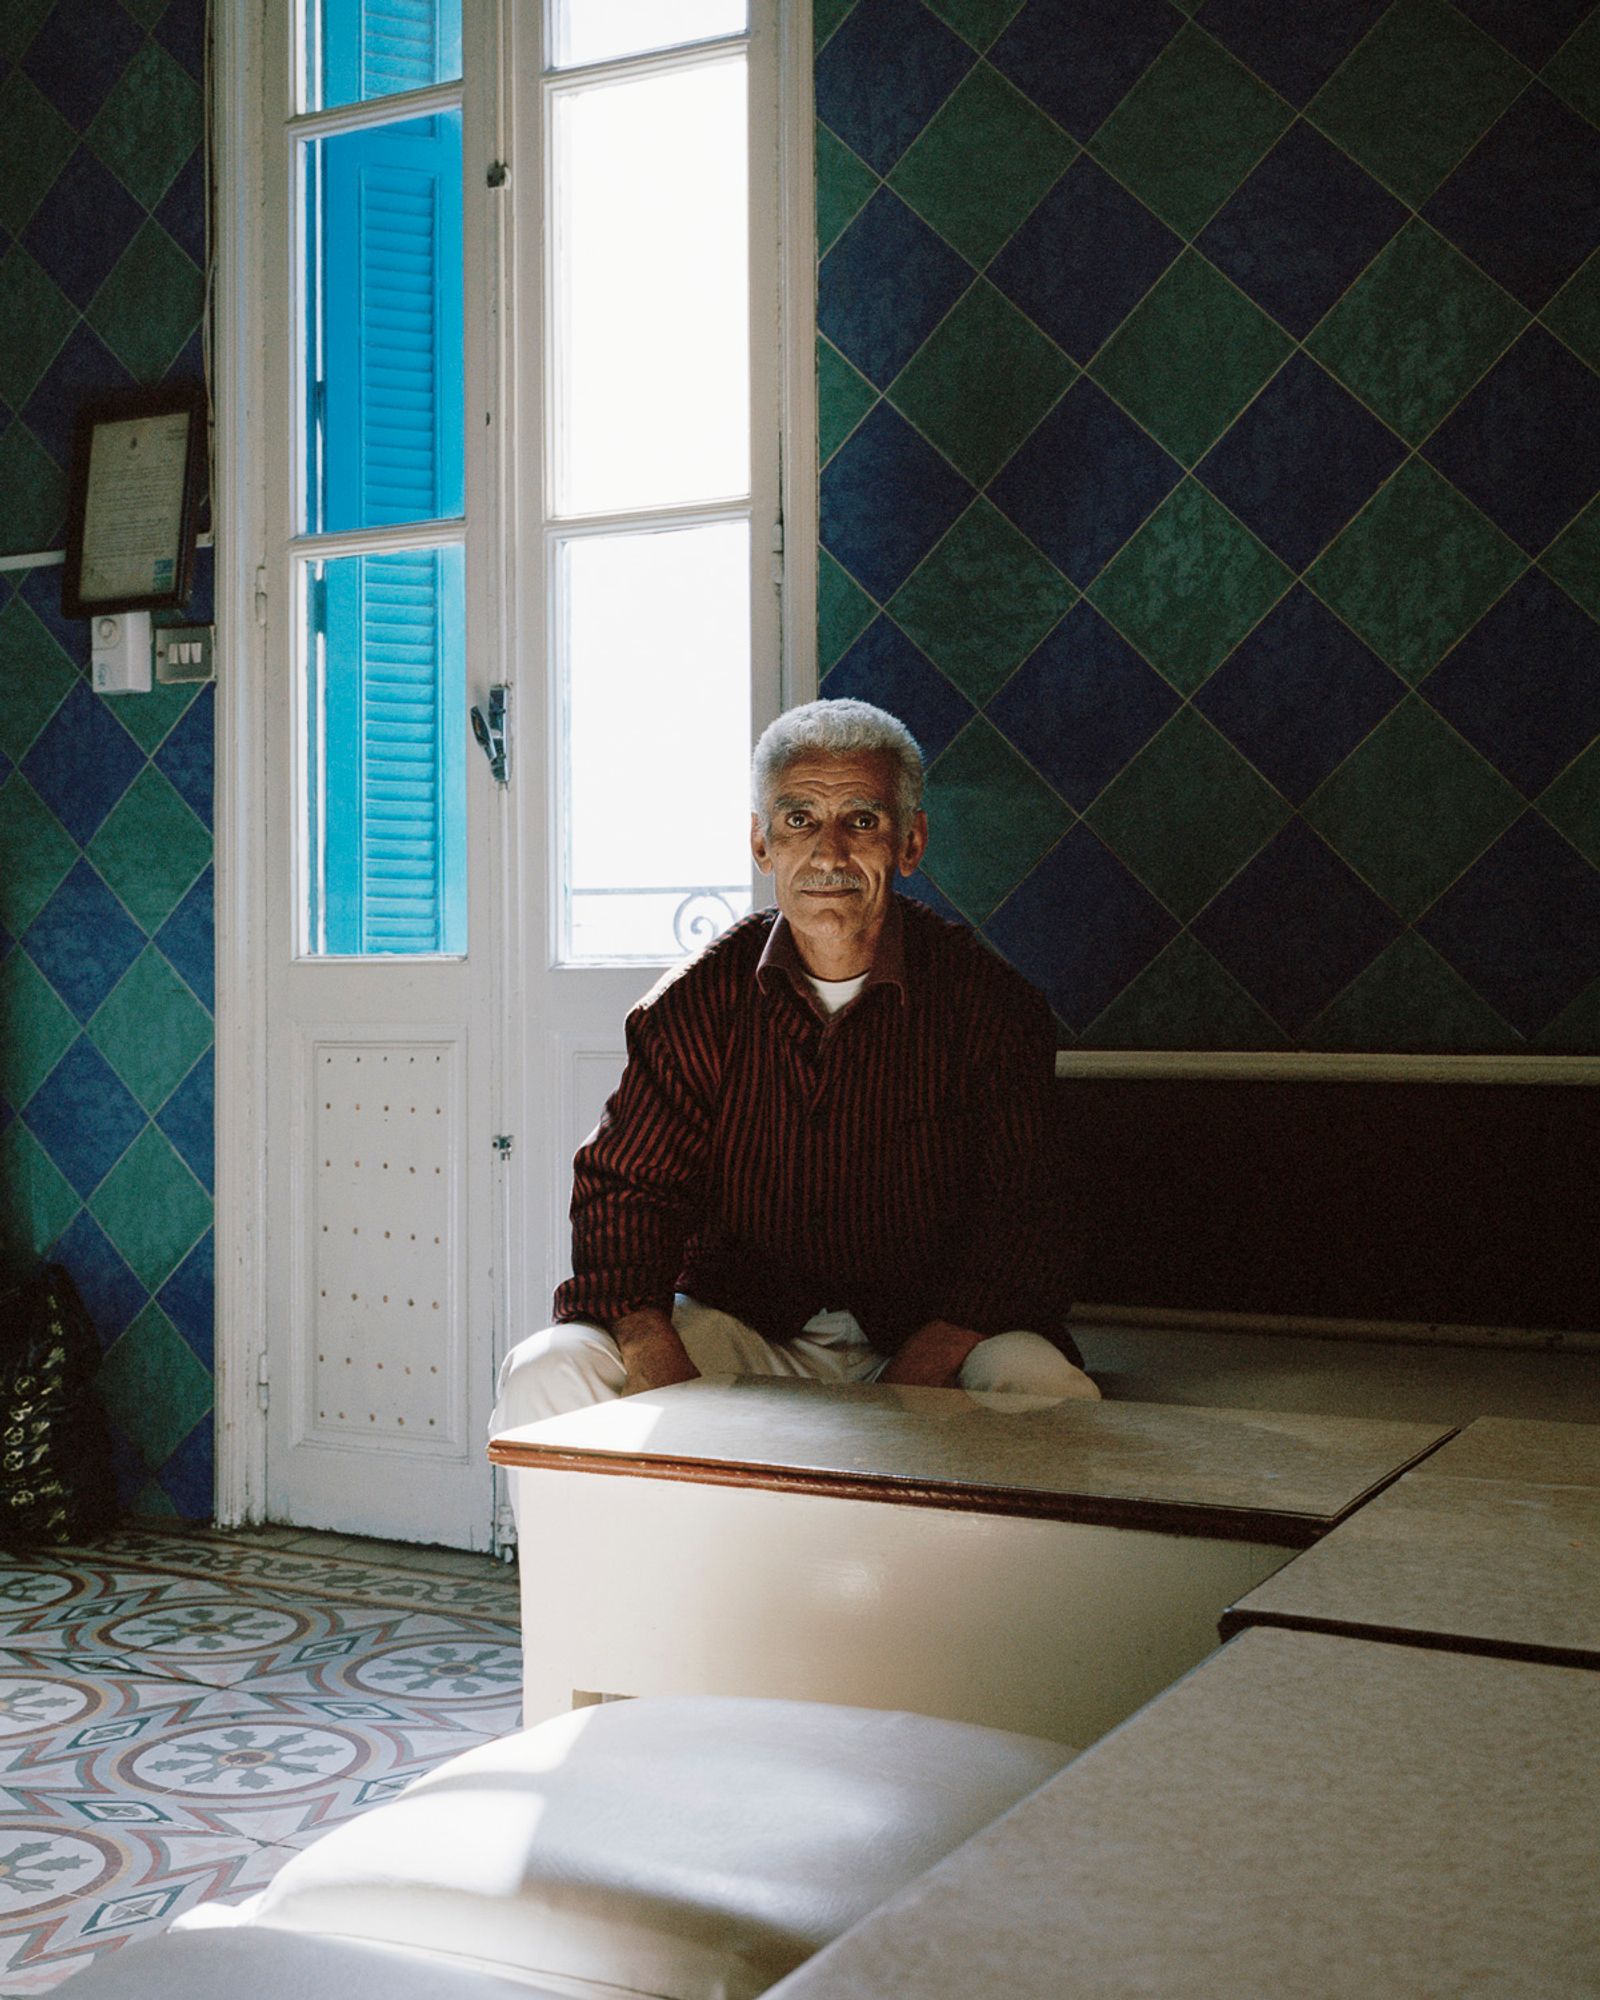 © Miriam Stanke - Ahmed in a hotel, Tunis